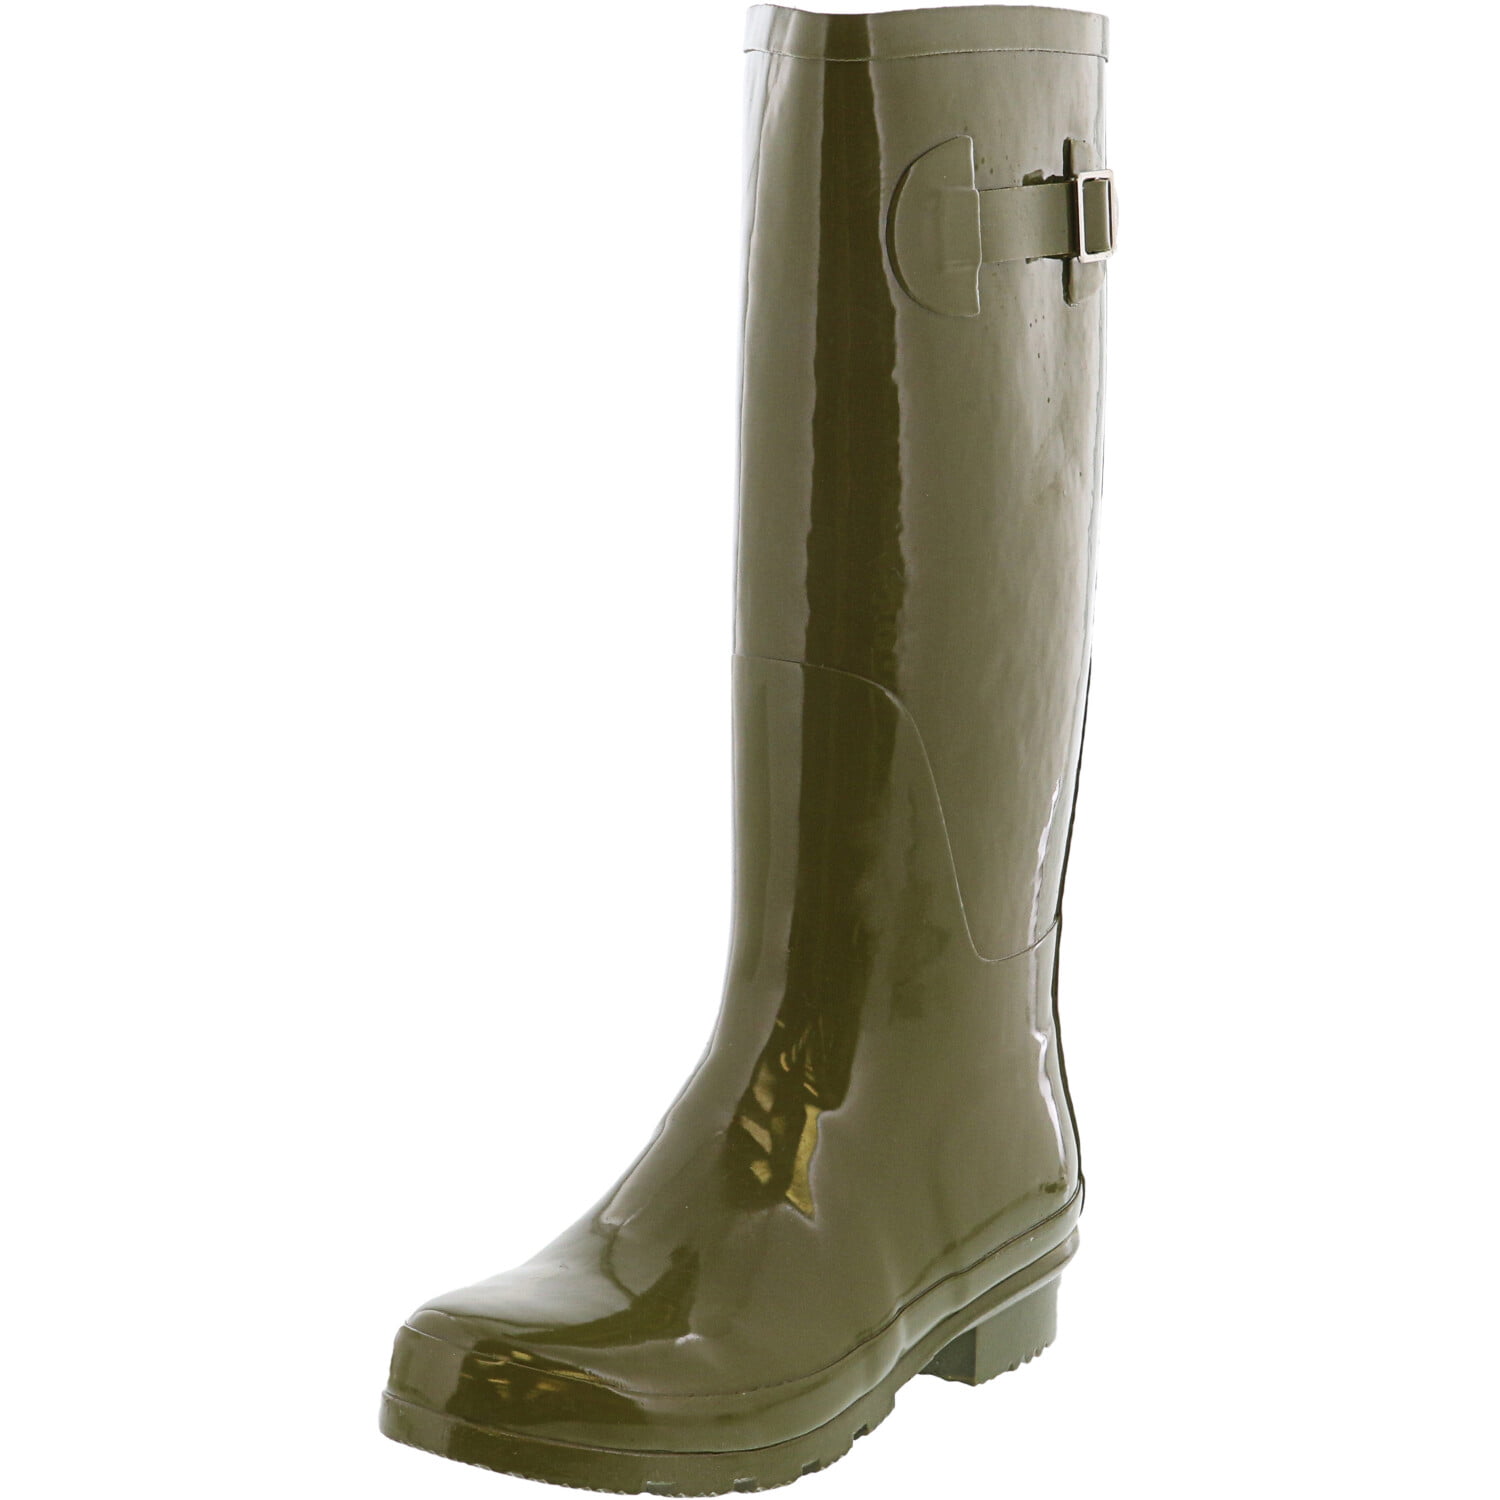 nomad rain boots